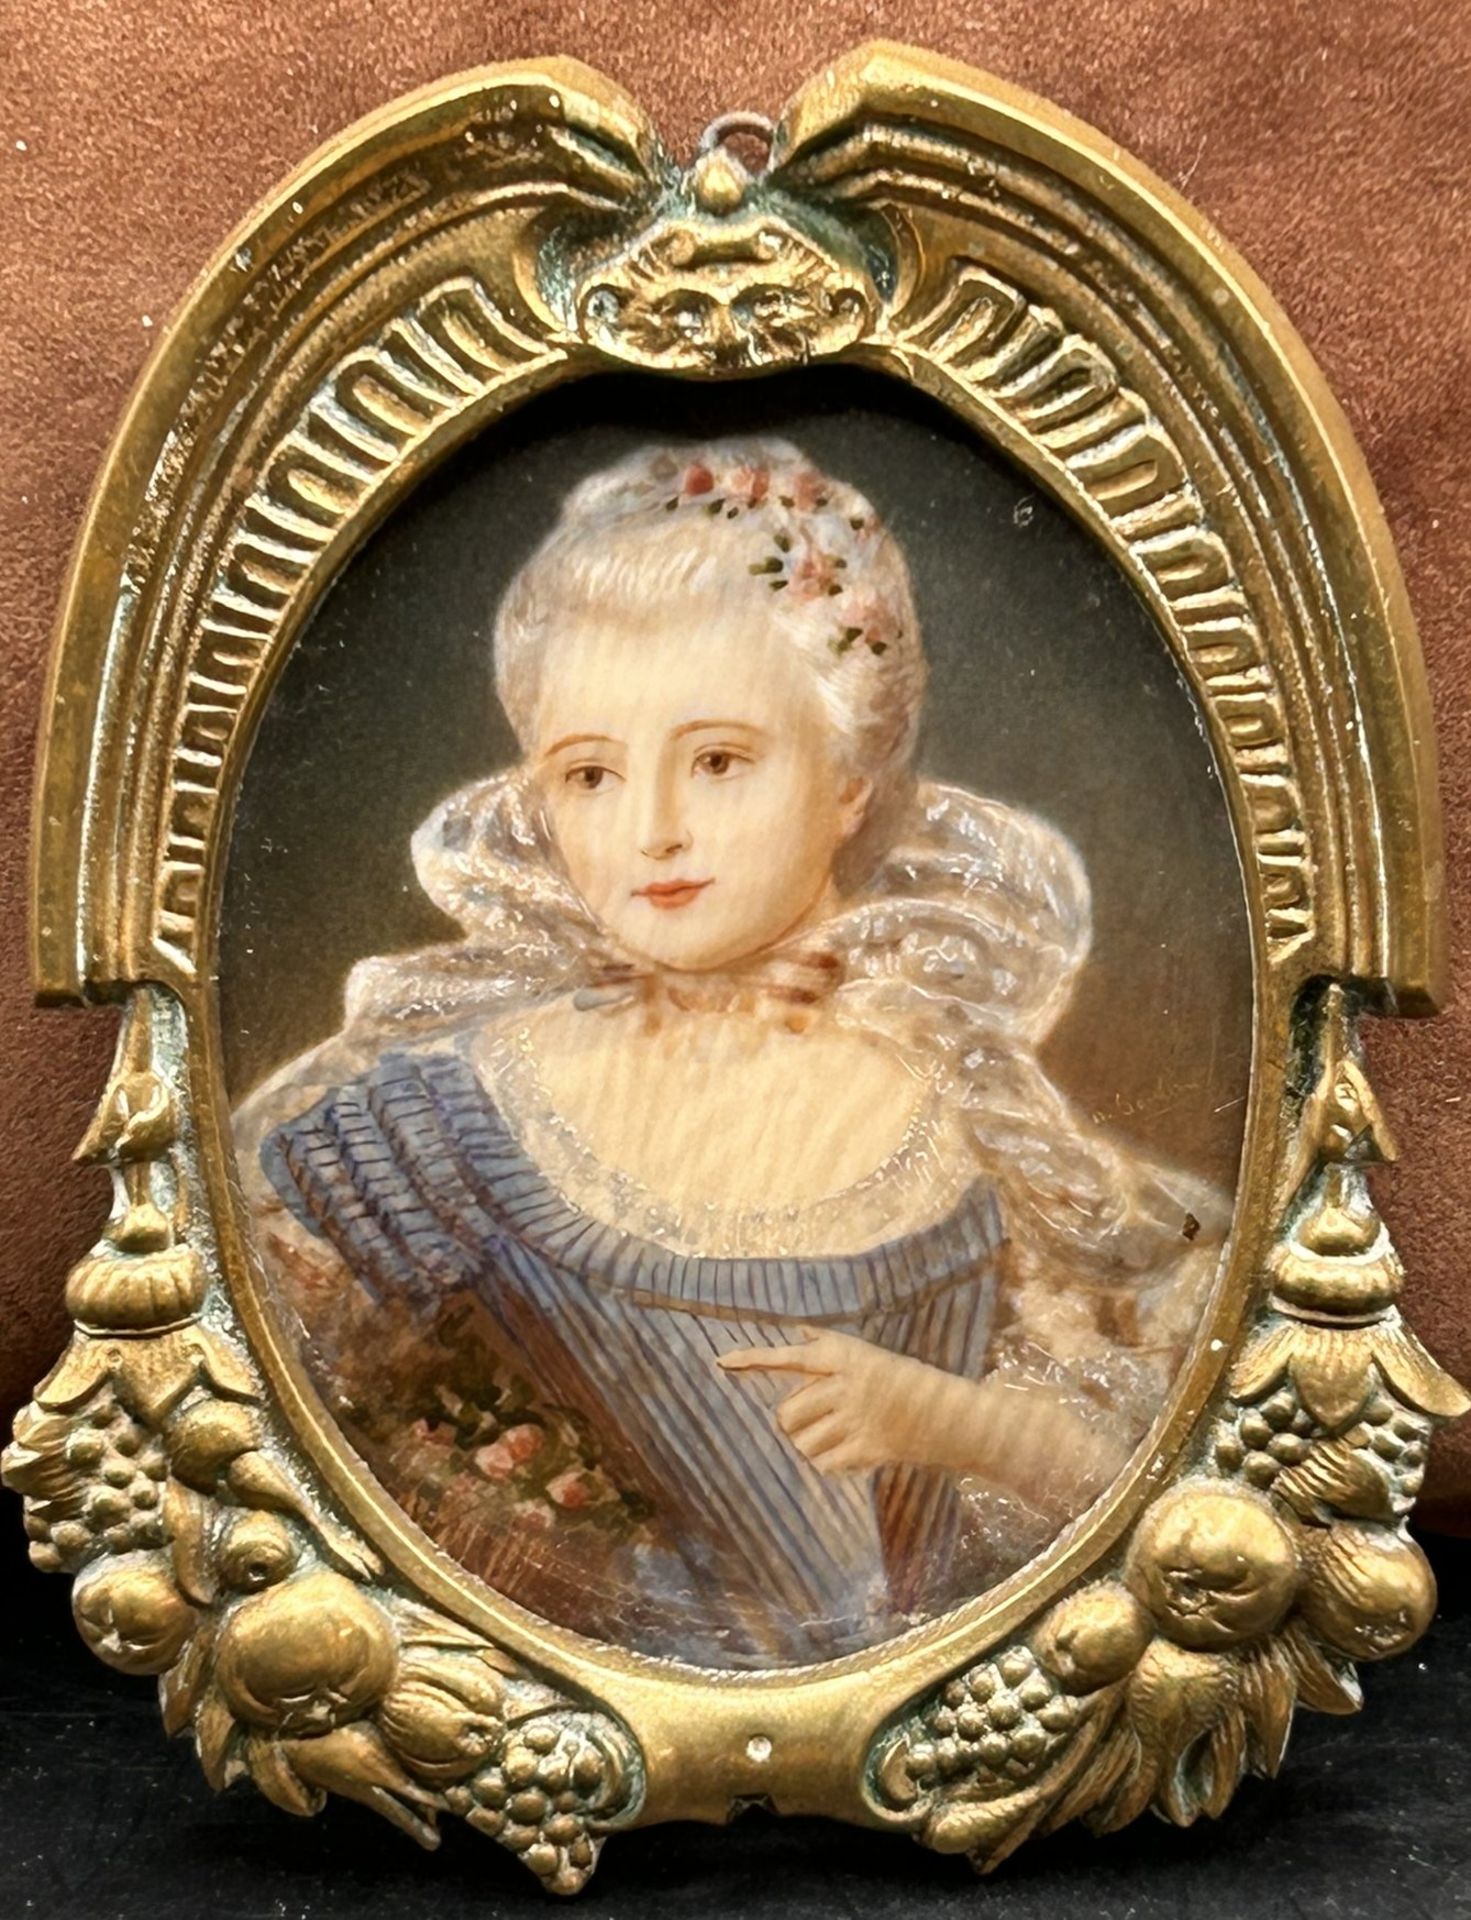 anonymes miniaturportrait um 1840 in massiven Messingrahmen/Glas, RG ca. 10x8 cm